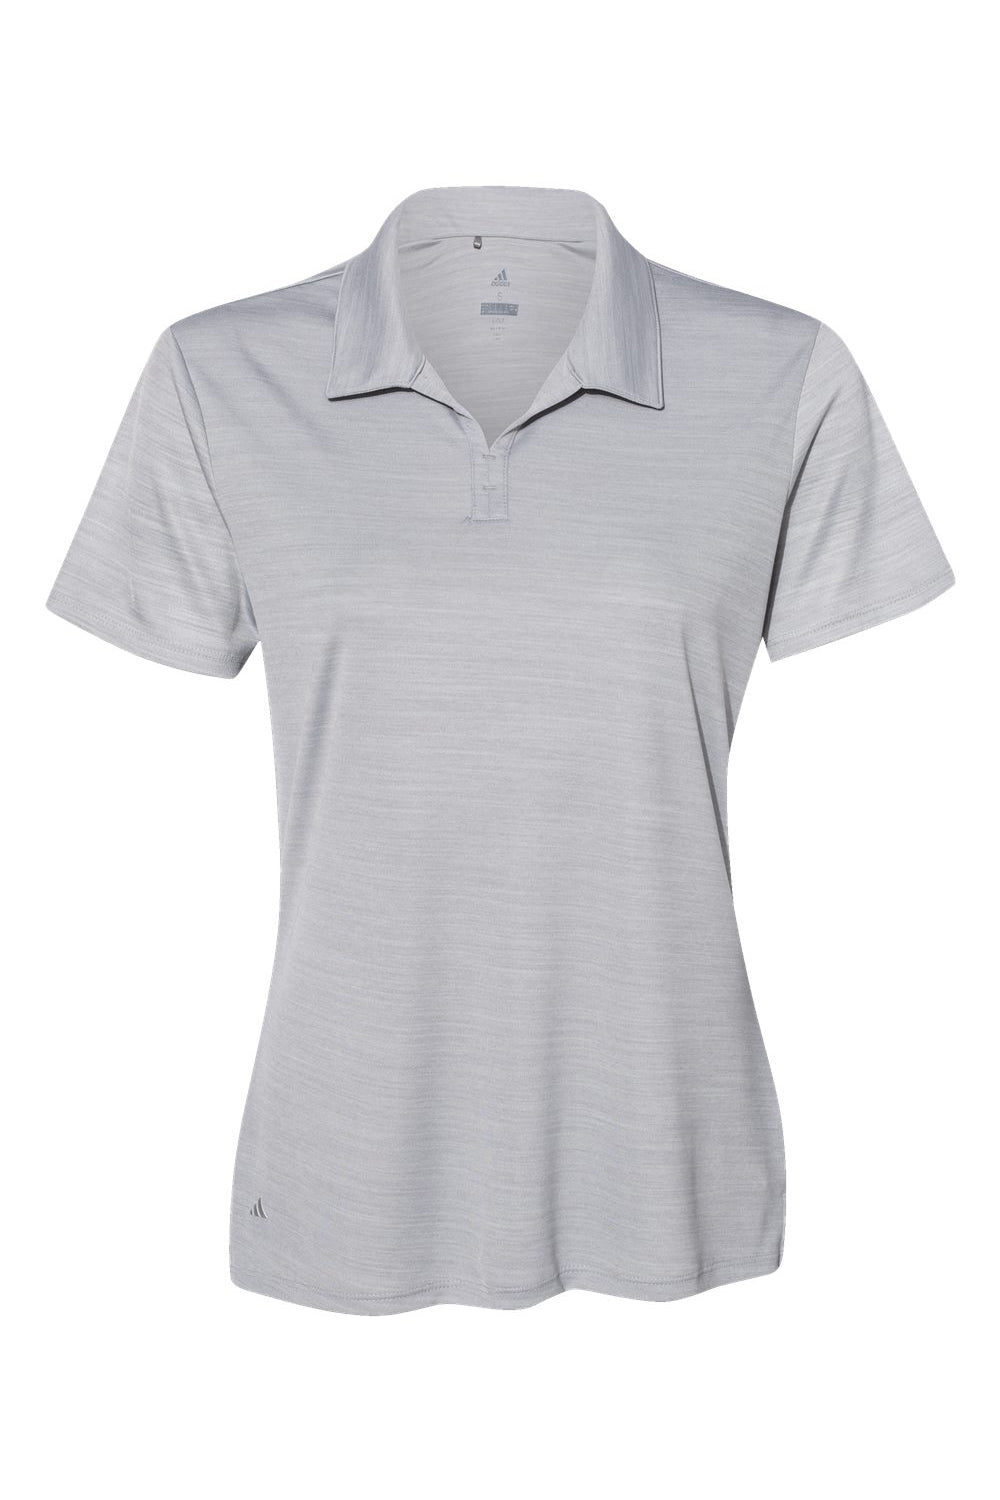 Adidas A403 Womens UPF 50+ Short Sleeve Polo Shirt Mid Grey Melange Flat Front